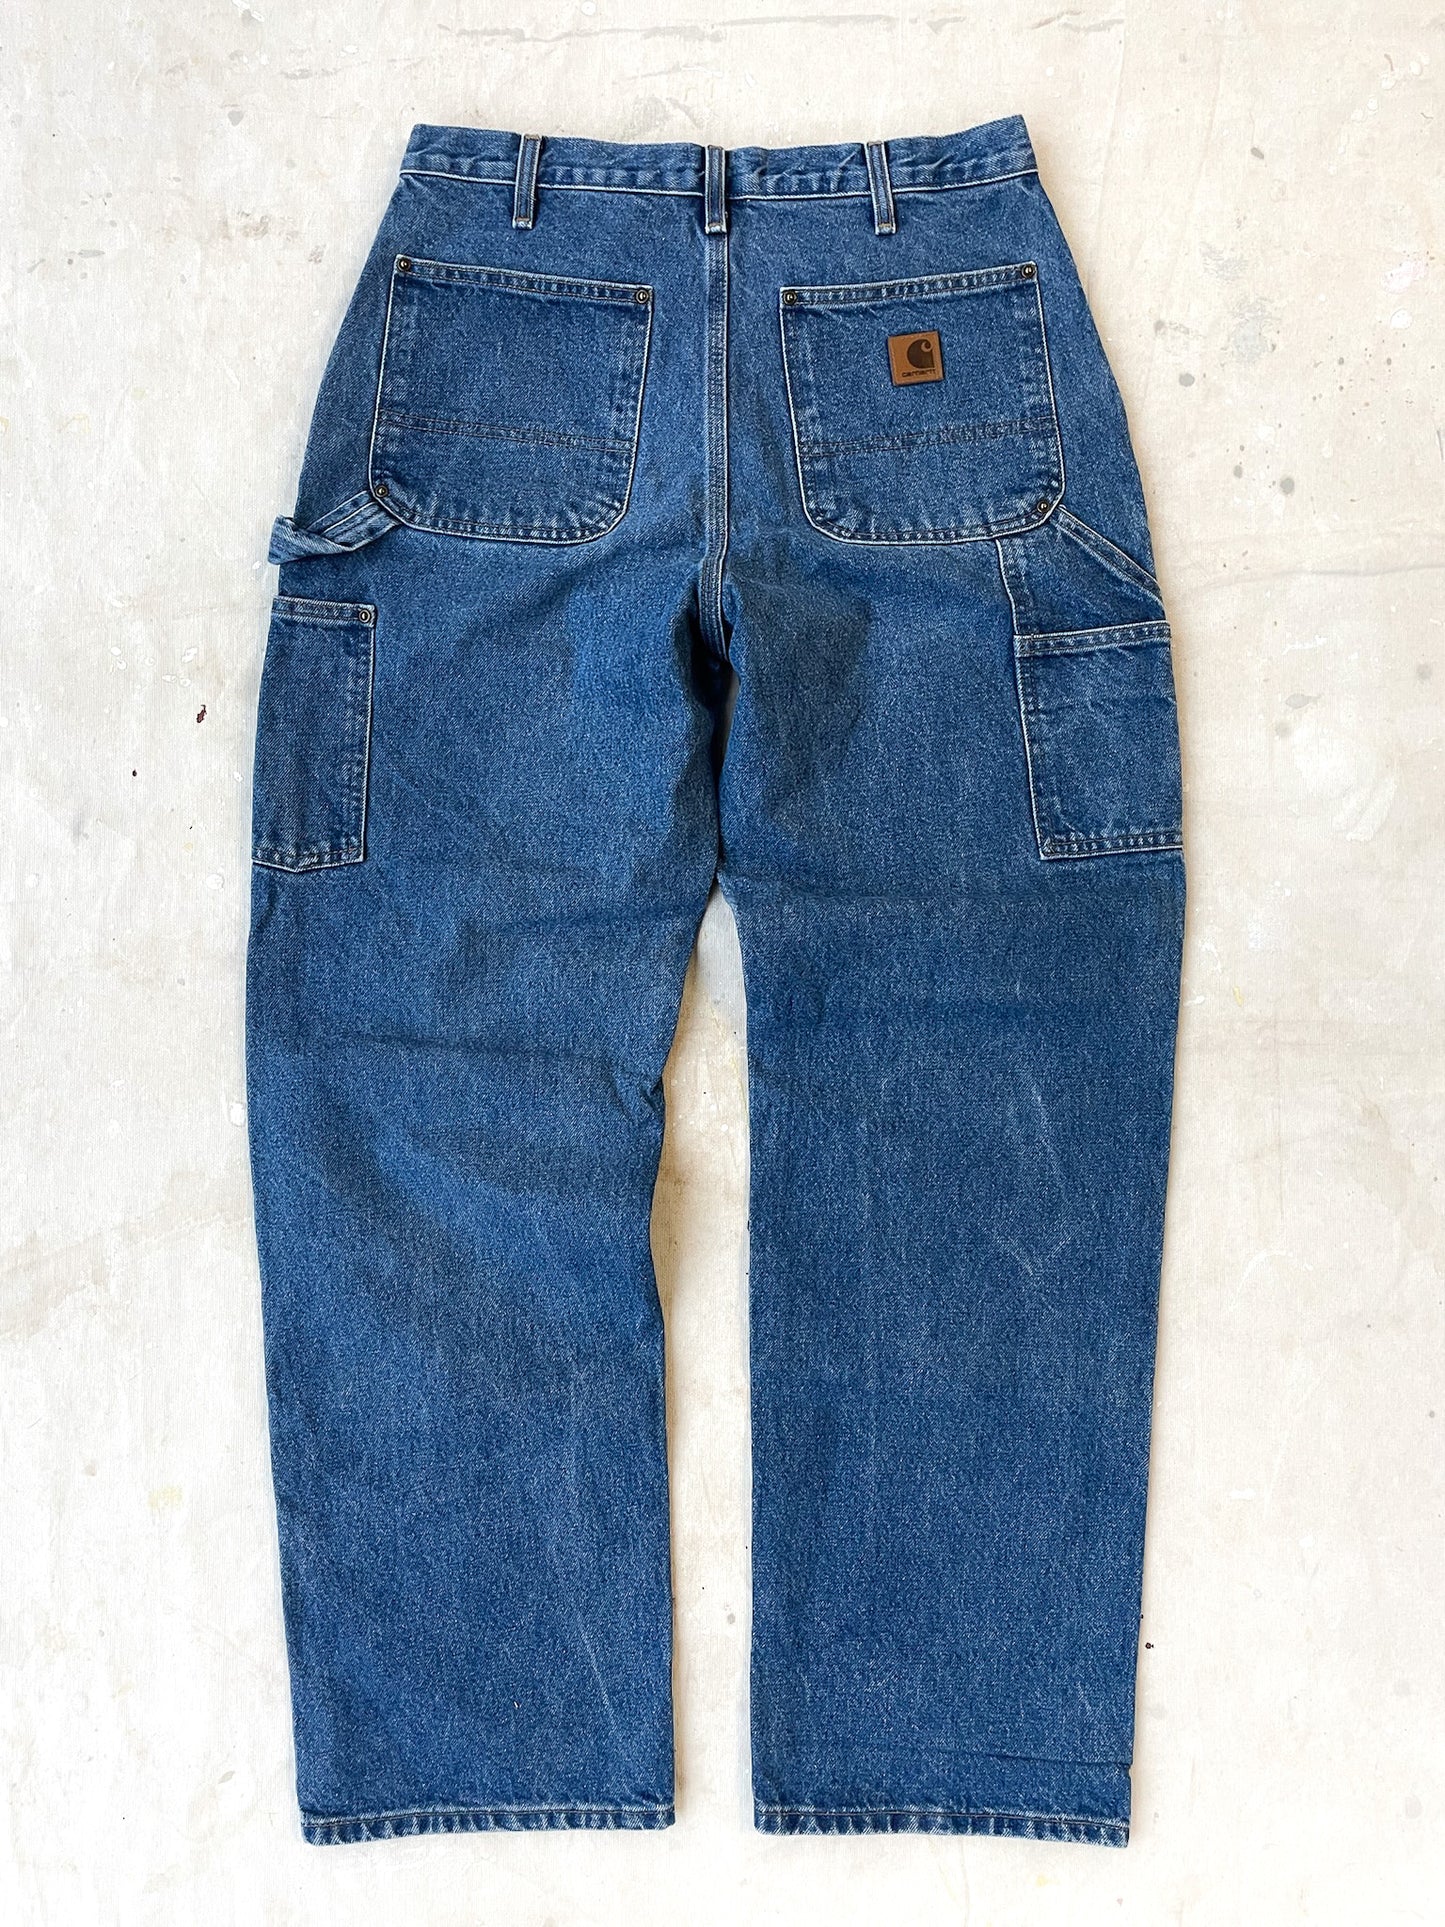 Carhartt  Double Knee Jeans—[32x32]